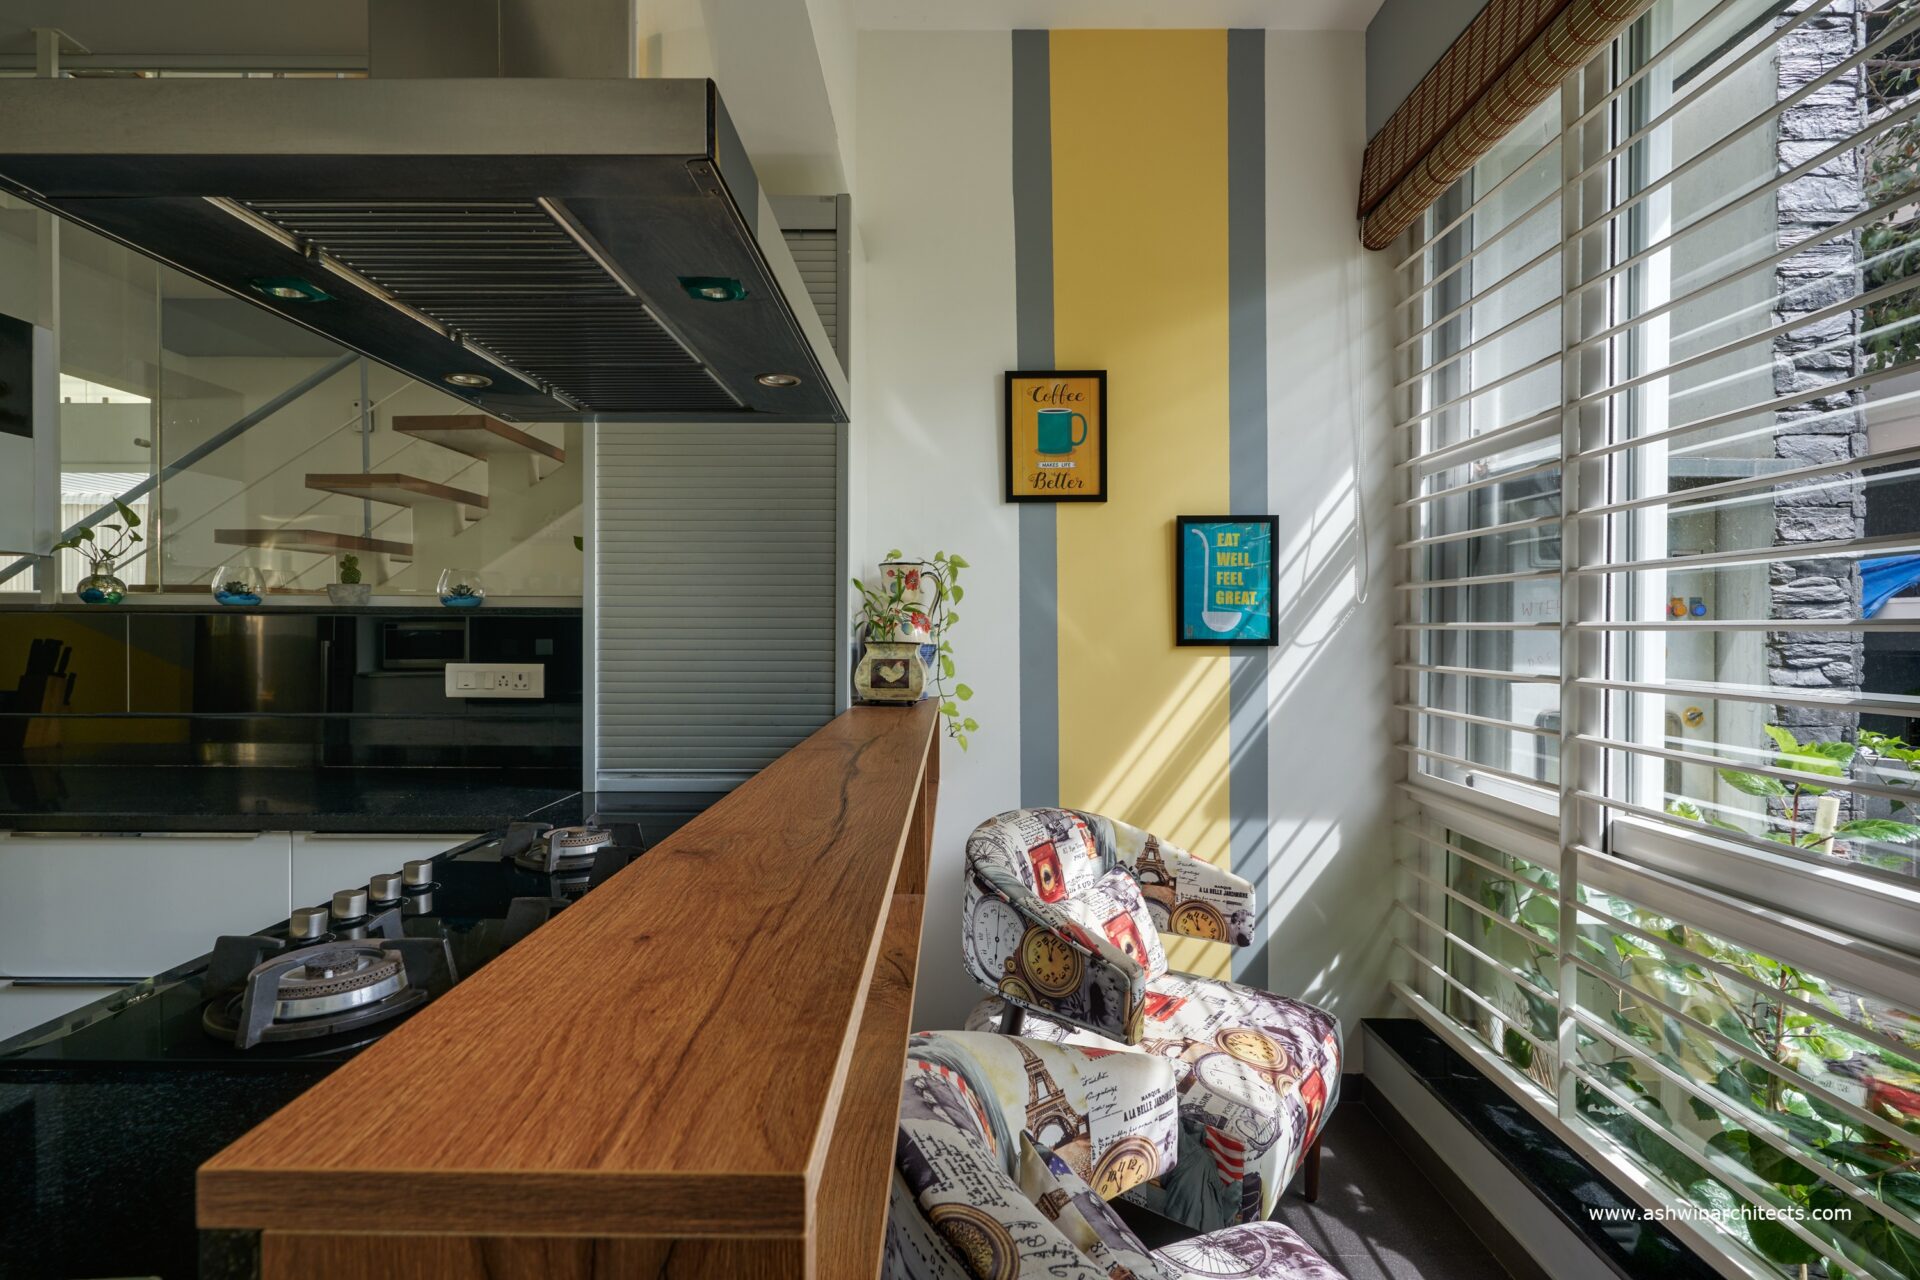 40x60-plot-Interiors-Kailash-Residence-40-x-60-Plot-3BHK-Duplex-Bungalow-3500-sft.-Family-Home-Design